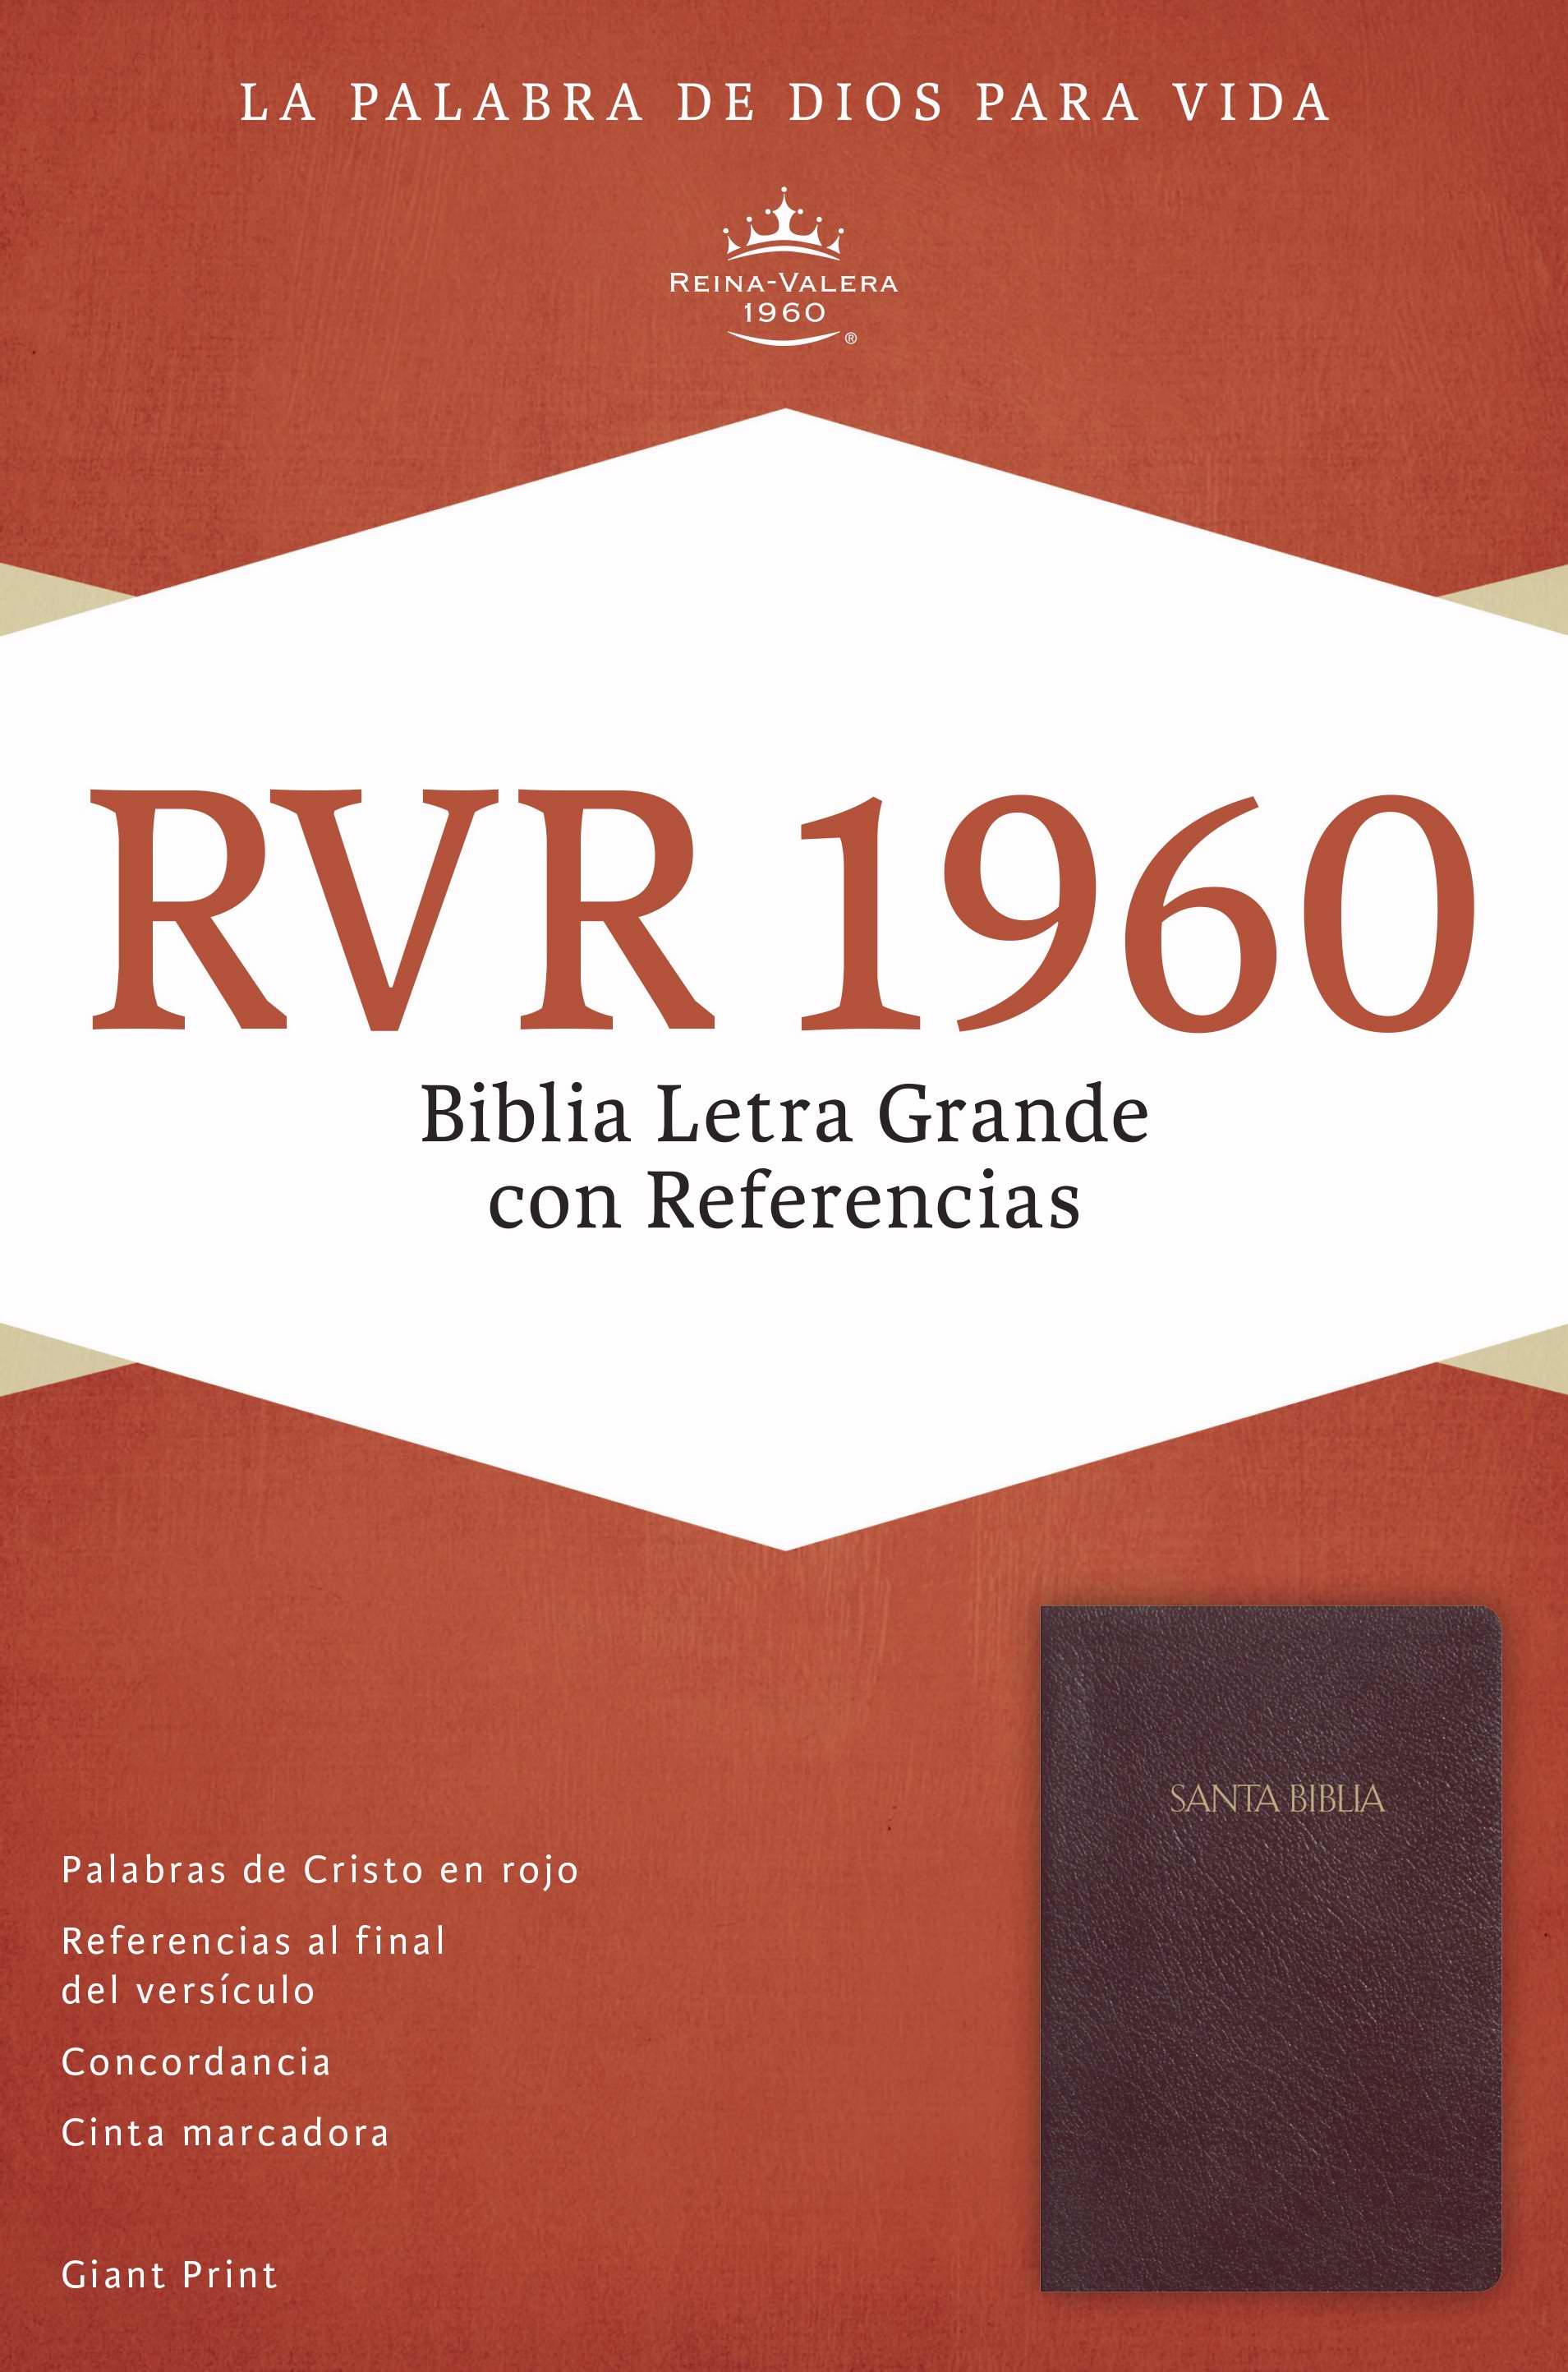 Image of RVR 1960 Biblia Letra Grande con Referencias, borgoña imitac other